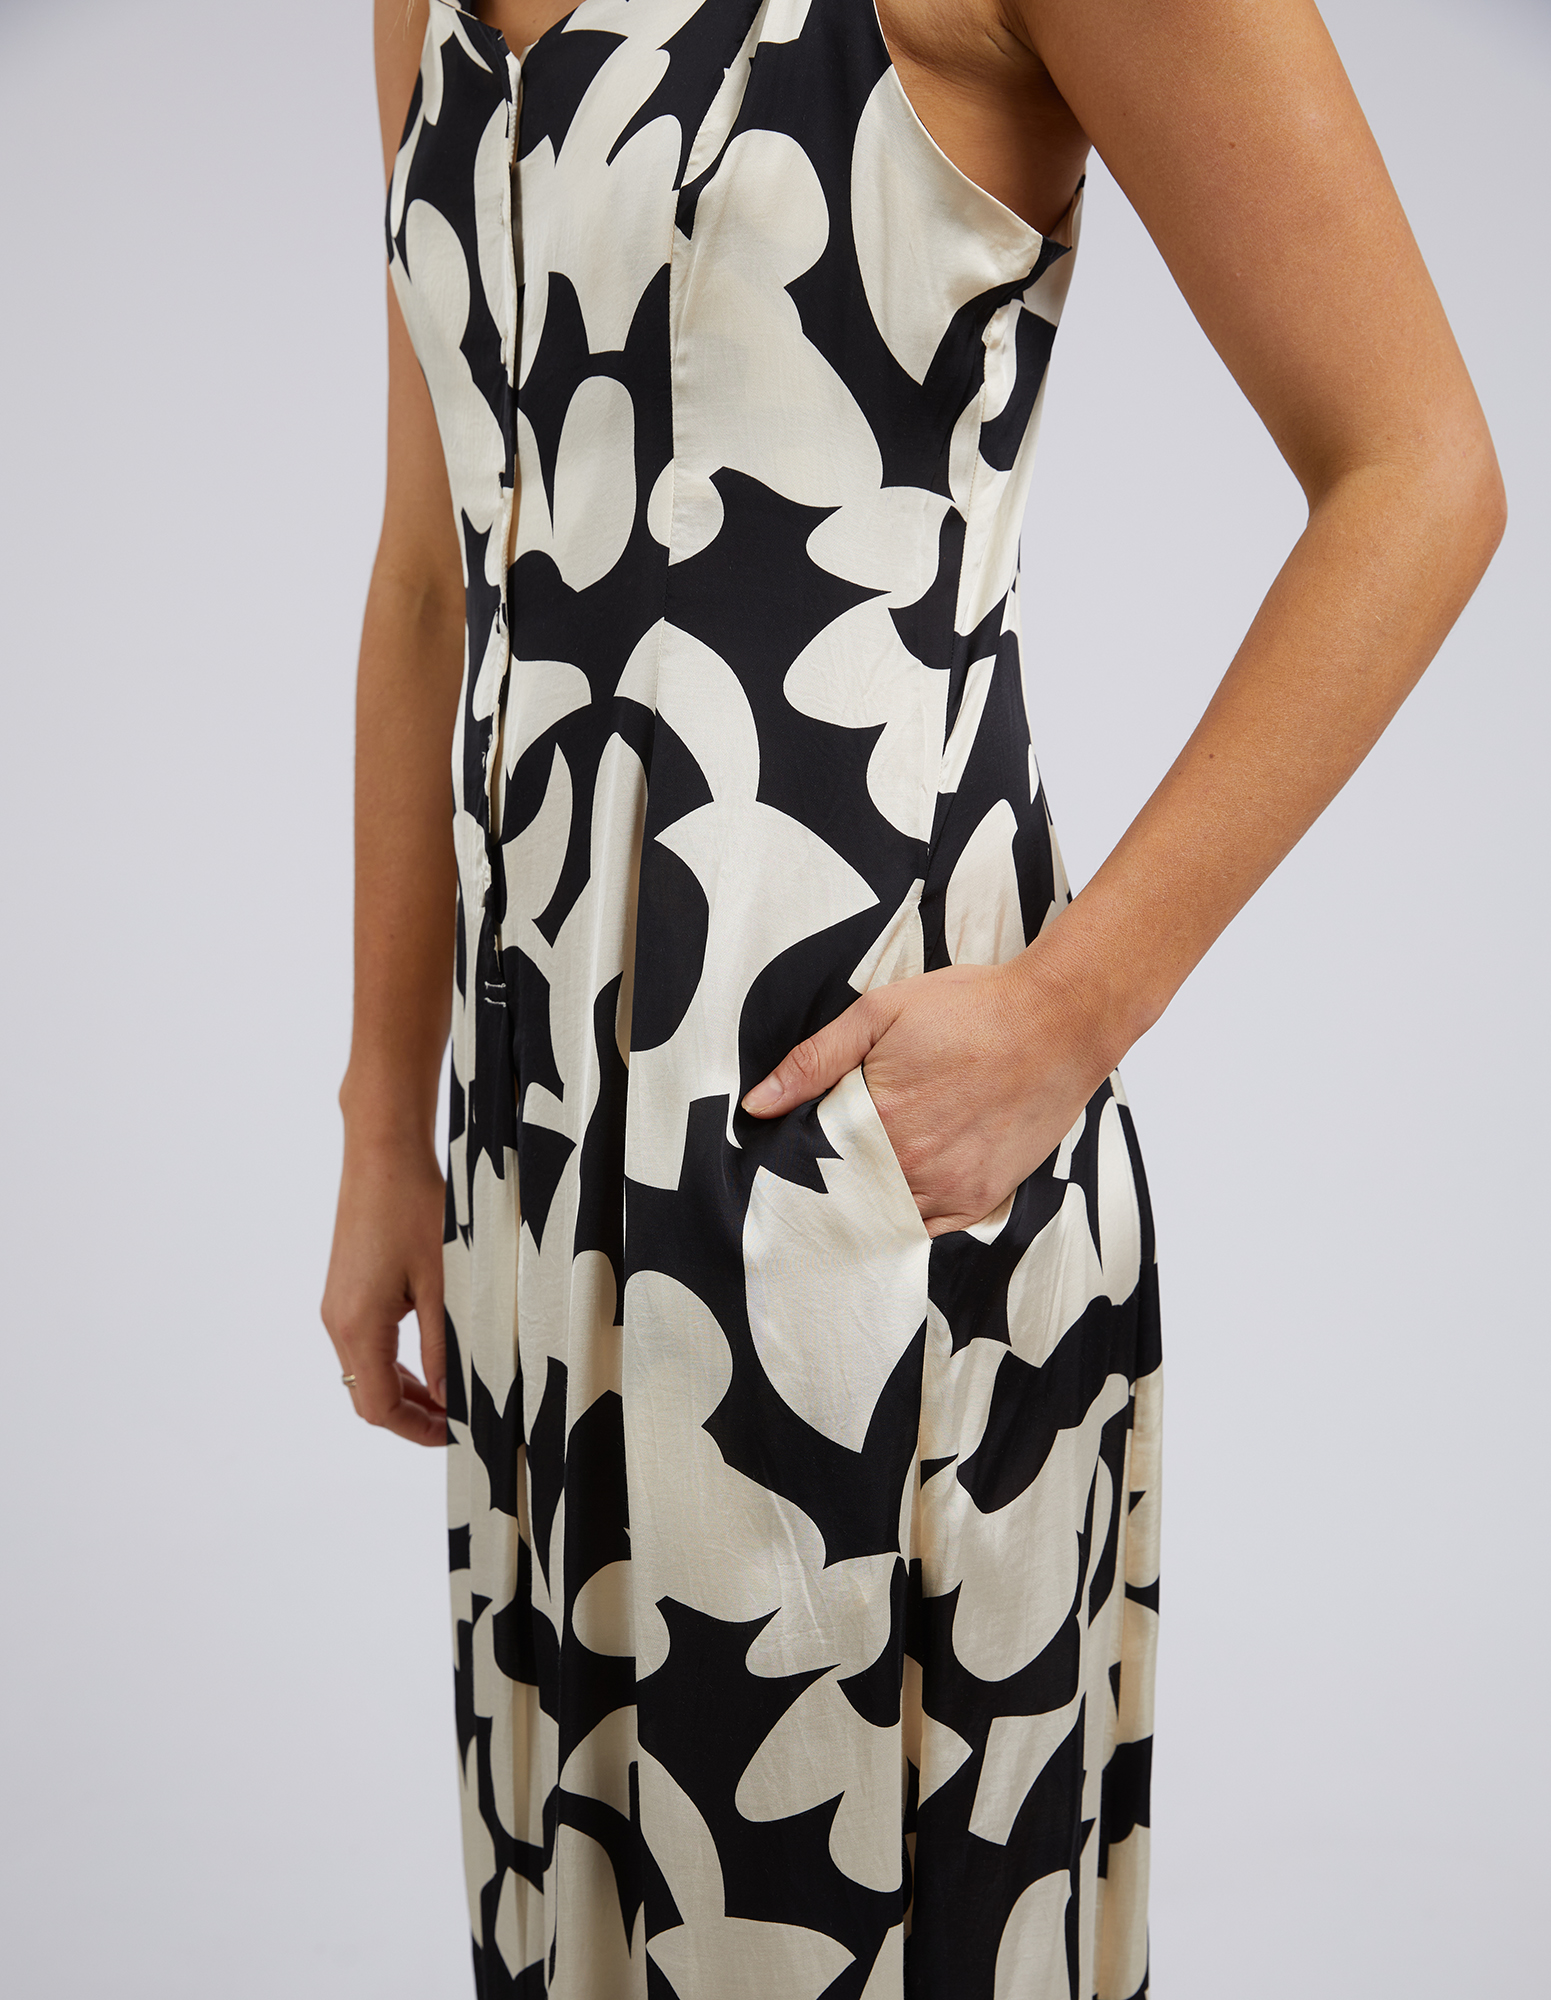 Calypso Dress - Black & White by FOXWOOD - CUT Clothing NZ